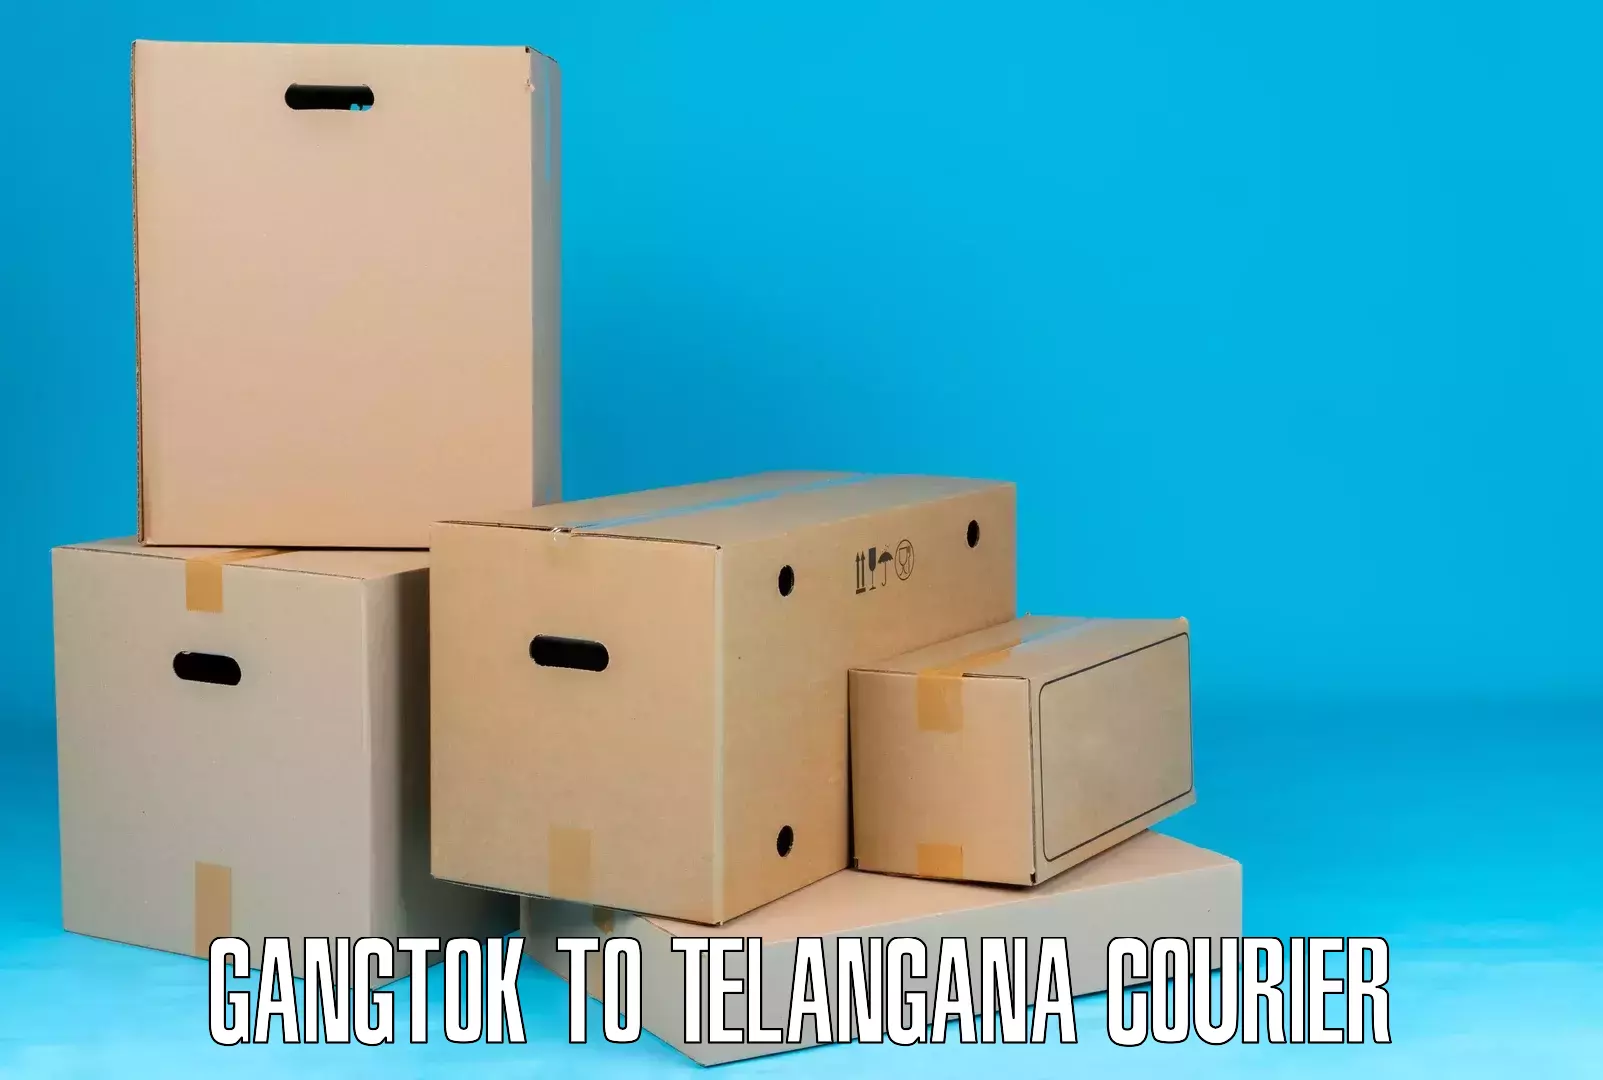 Affordable parcel service Gangtok to Telangana